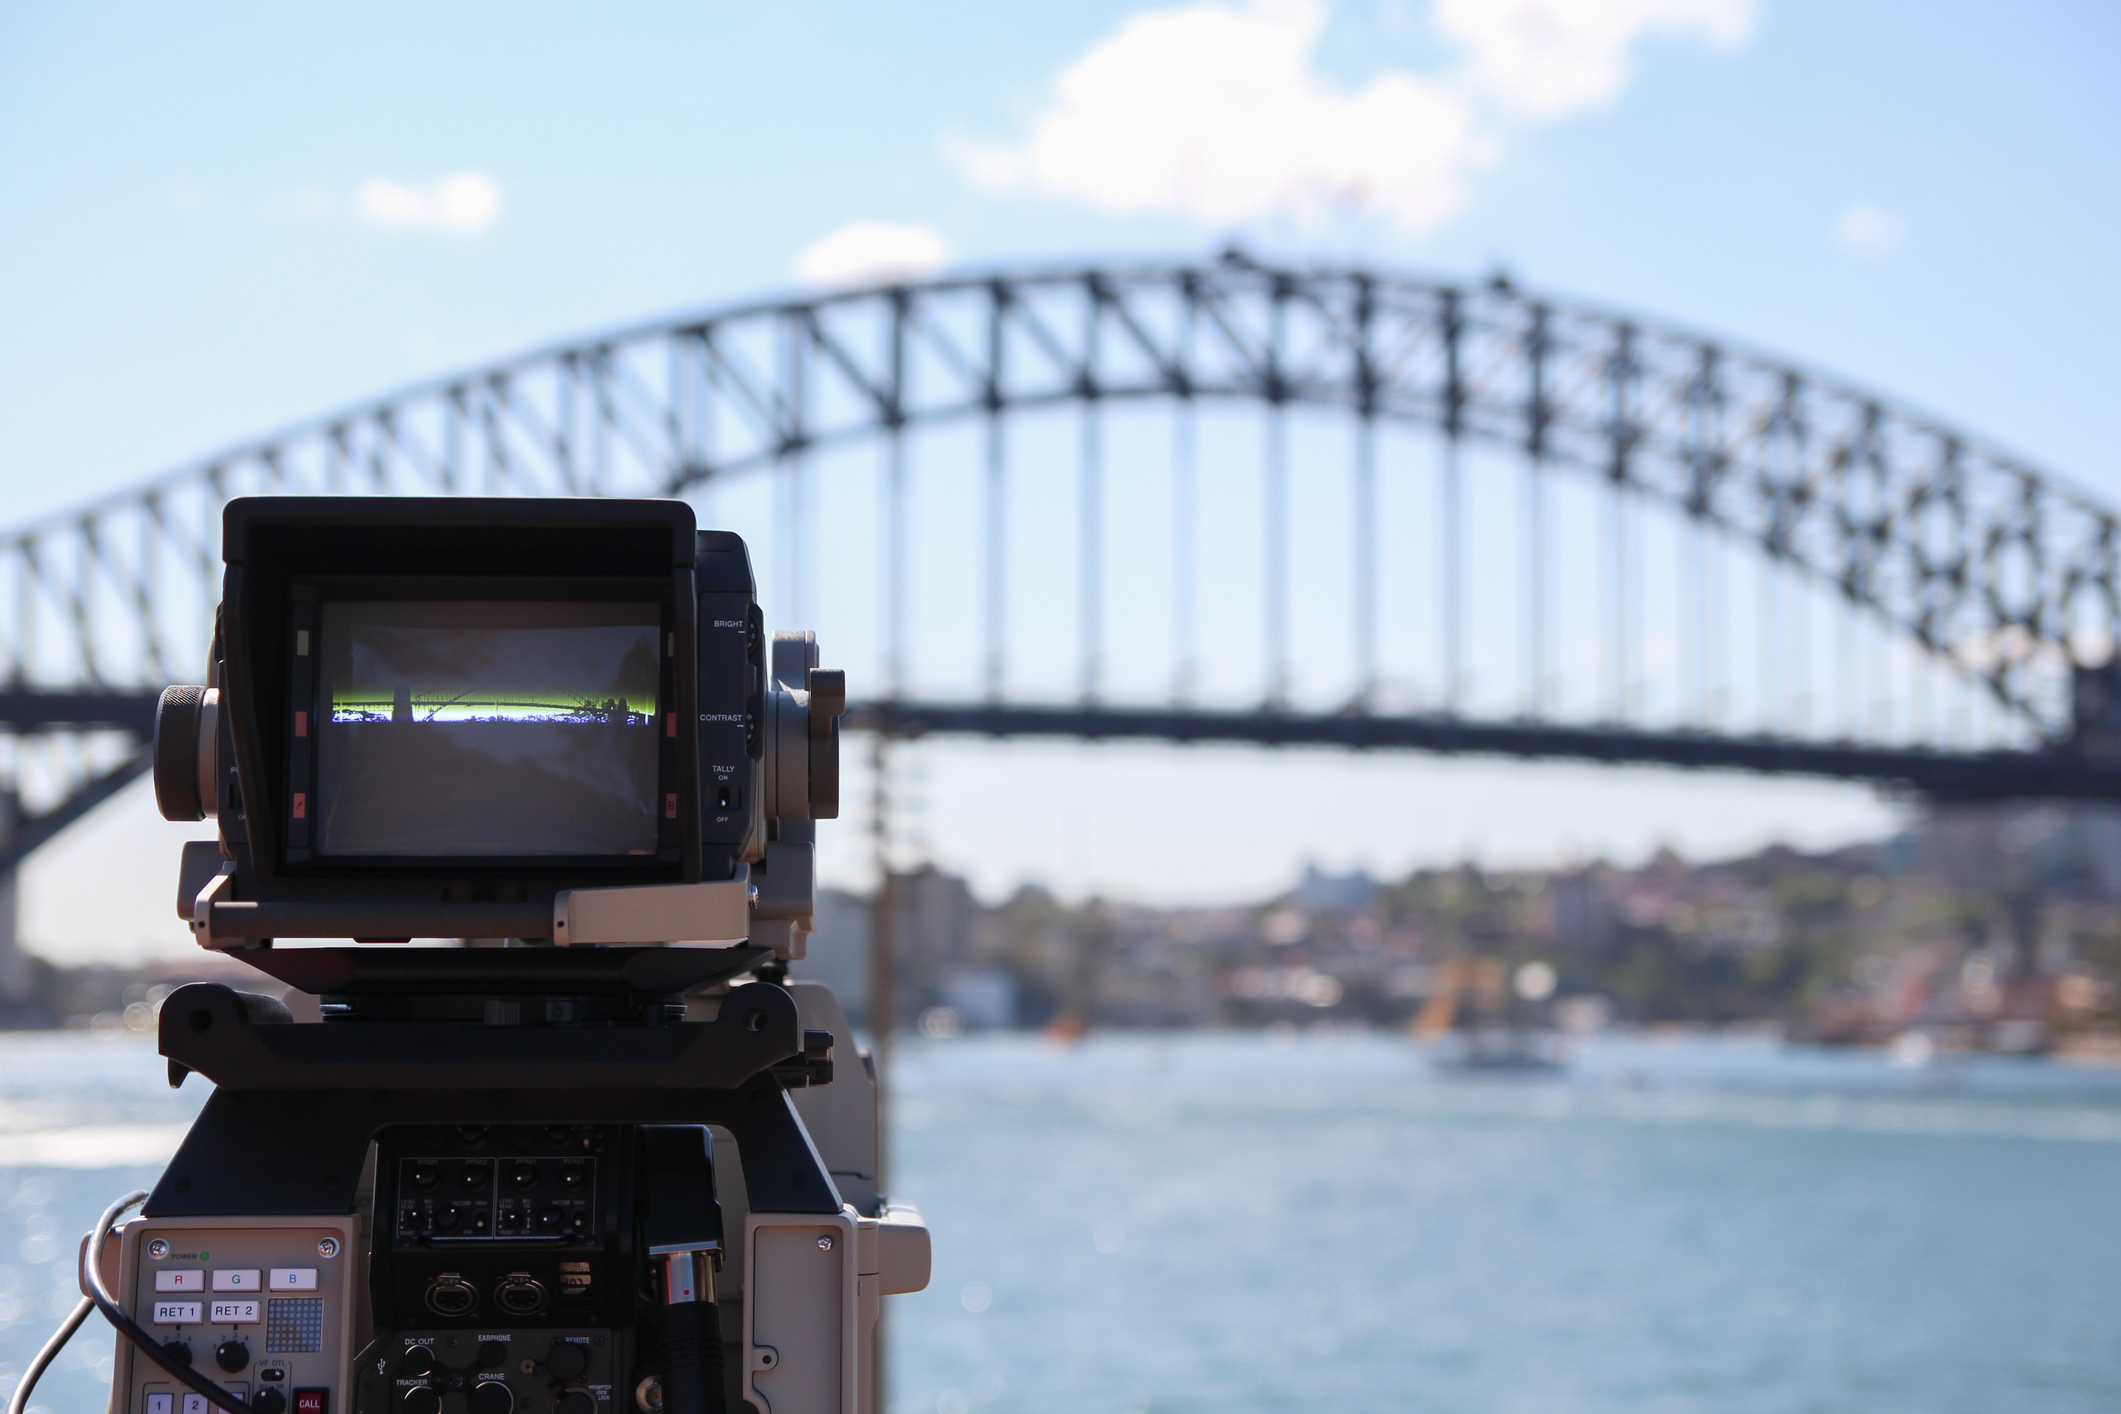 Filming the Sydney Harbor Bridge